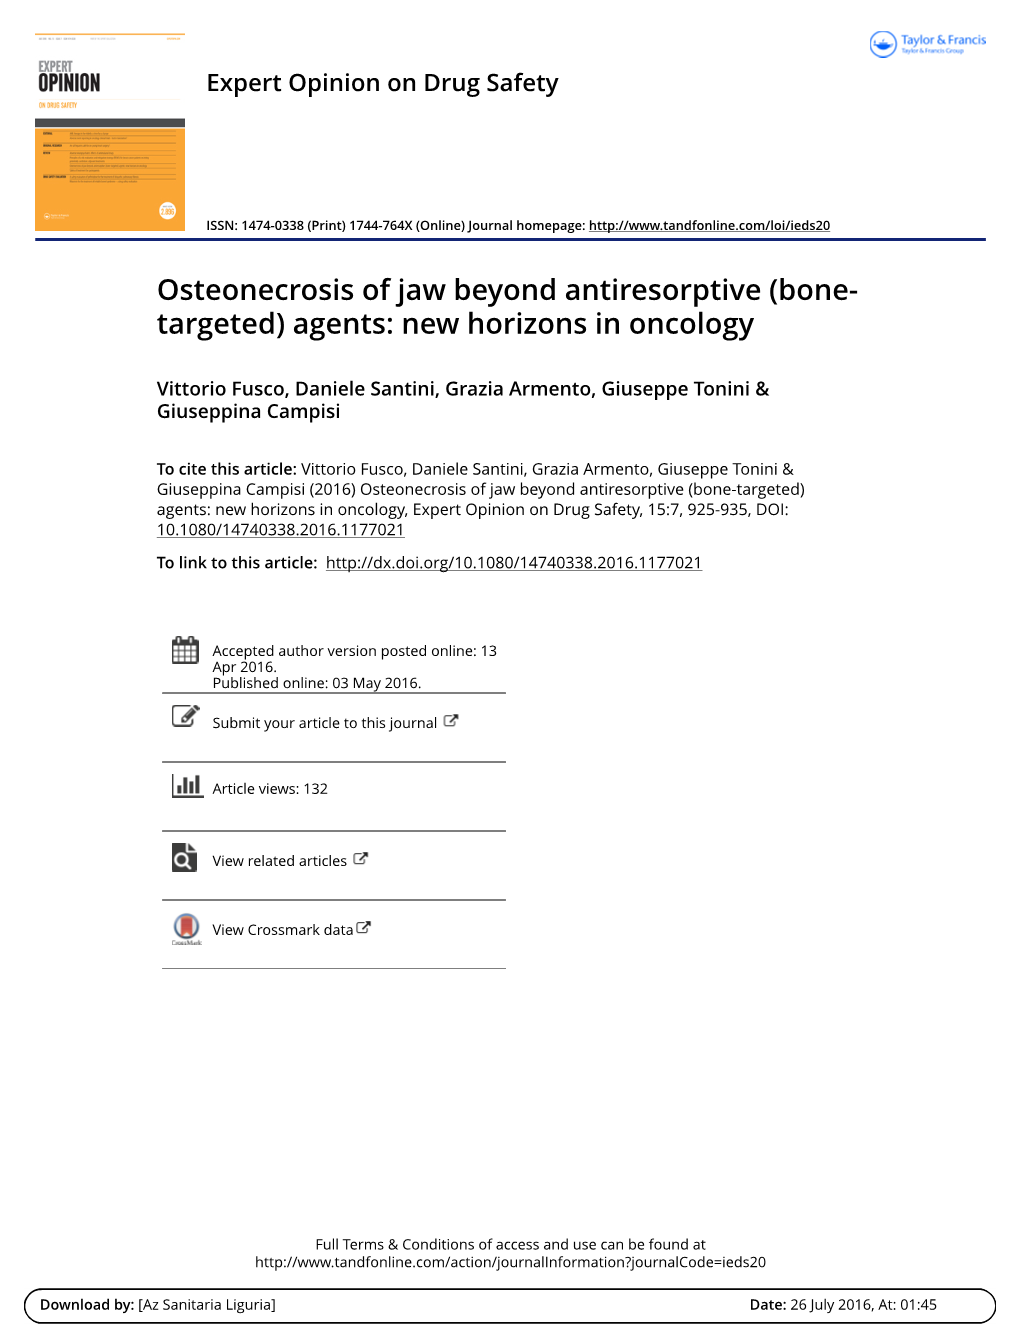 Osteonecrosis of Jaw Beyond Antiresorptive (Bone-Targeted)